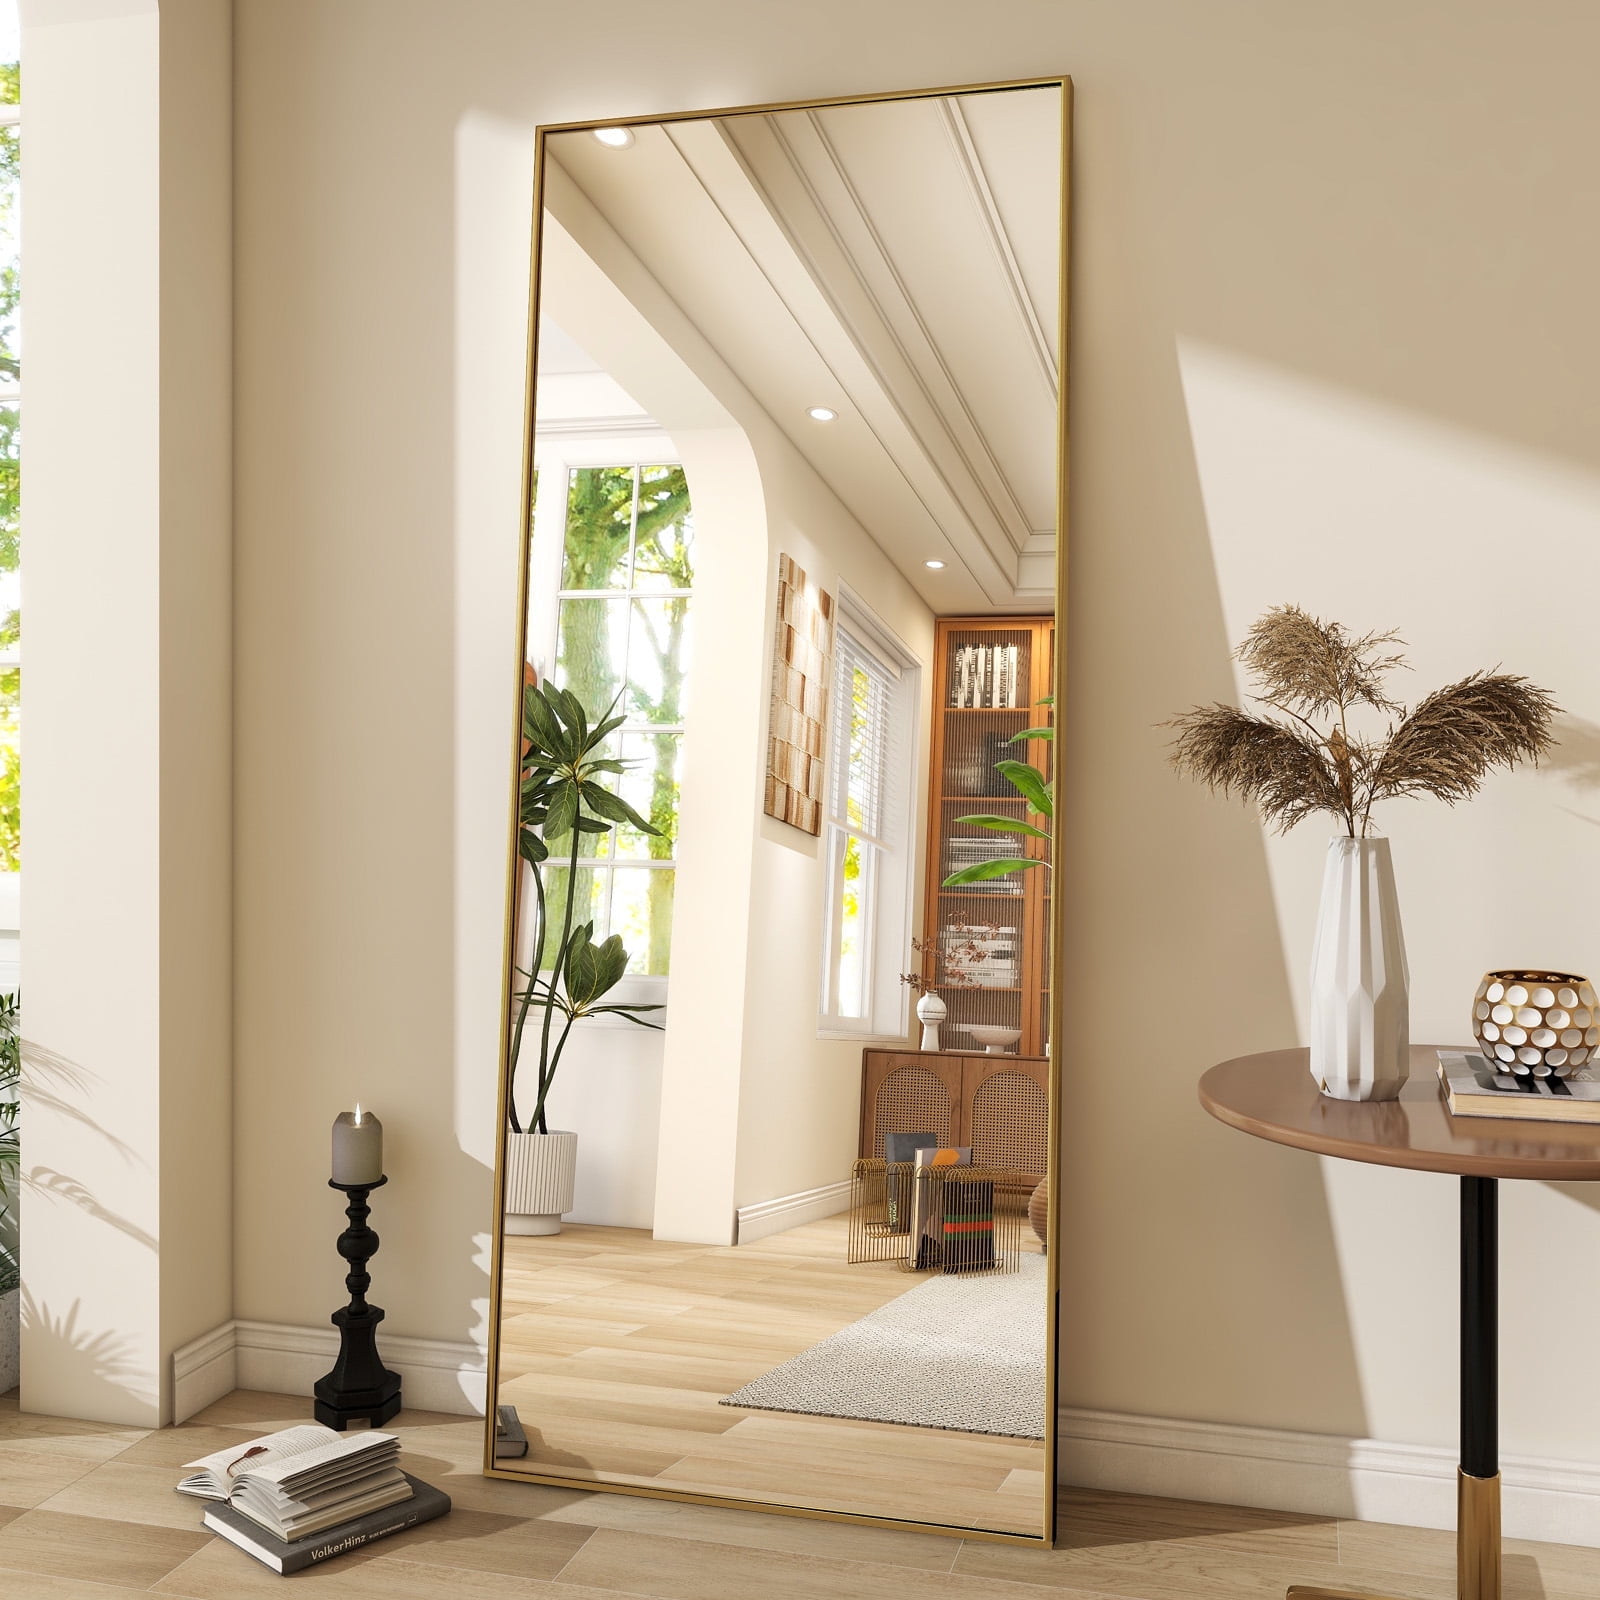 BEAUTYPEAK 71"x26" Full Length Mirror Oversized Rectangle Body Dressing Floor Mirrors for Standing Leaning, Gold - image 1 of 9